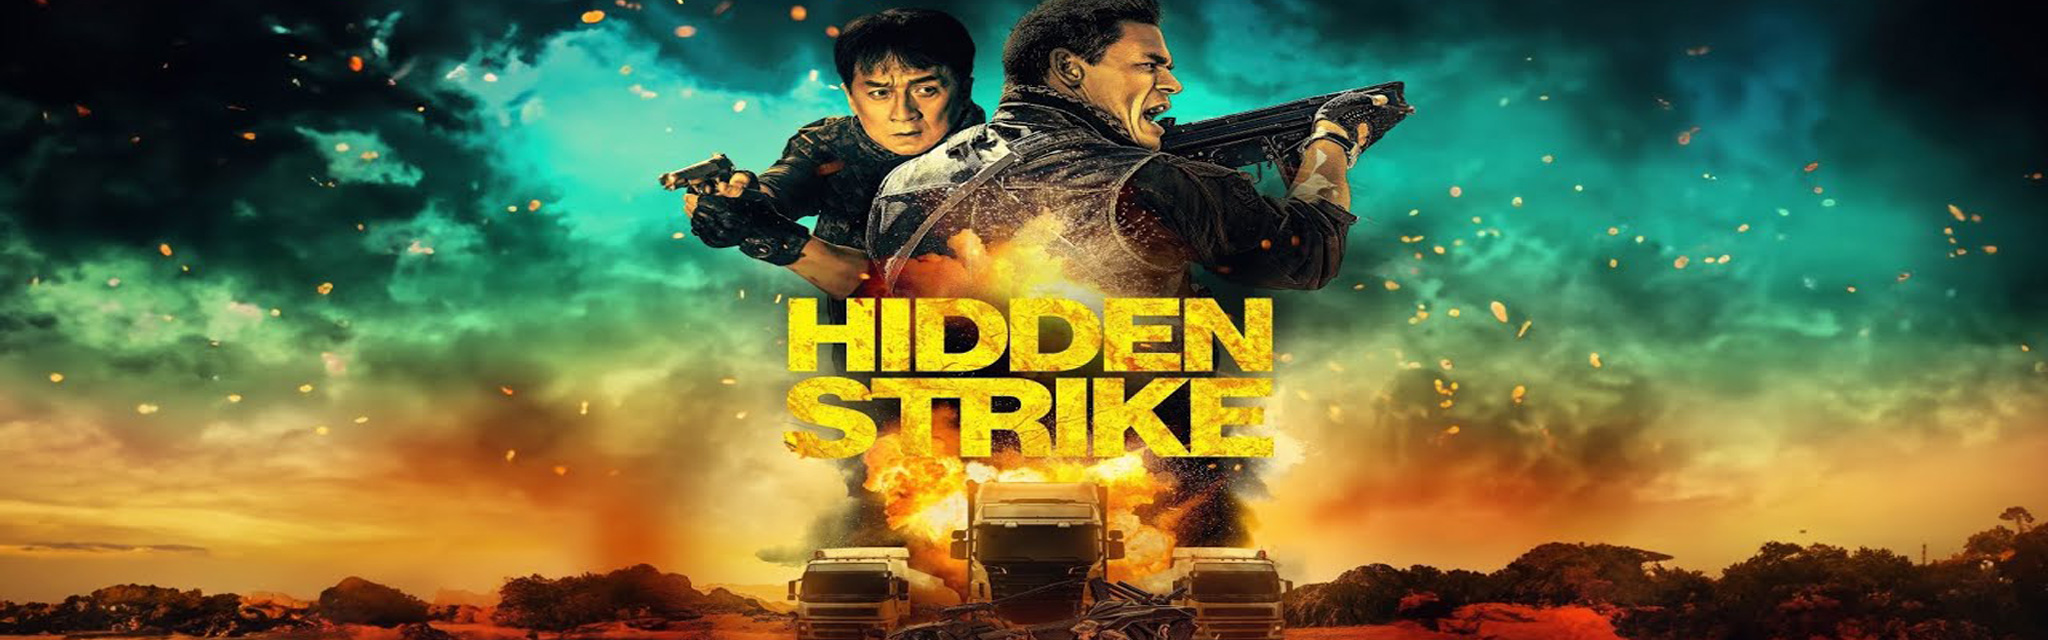  Hidden Strike [9112]